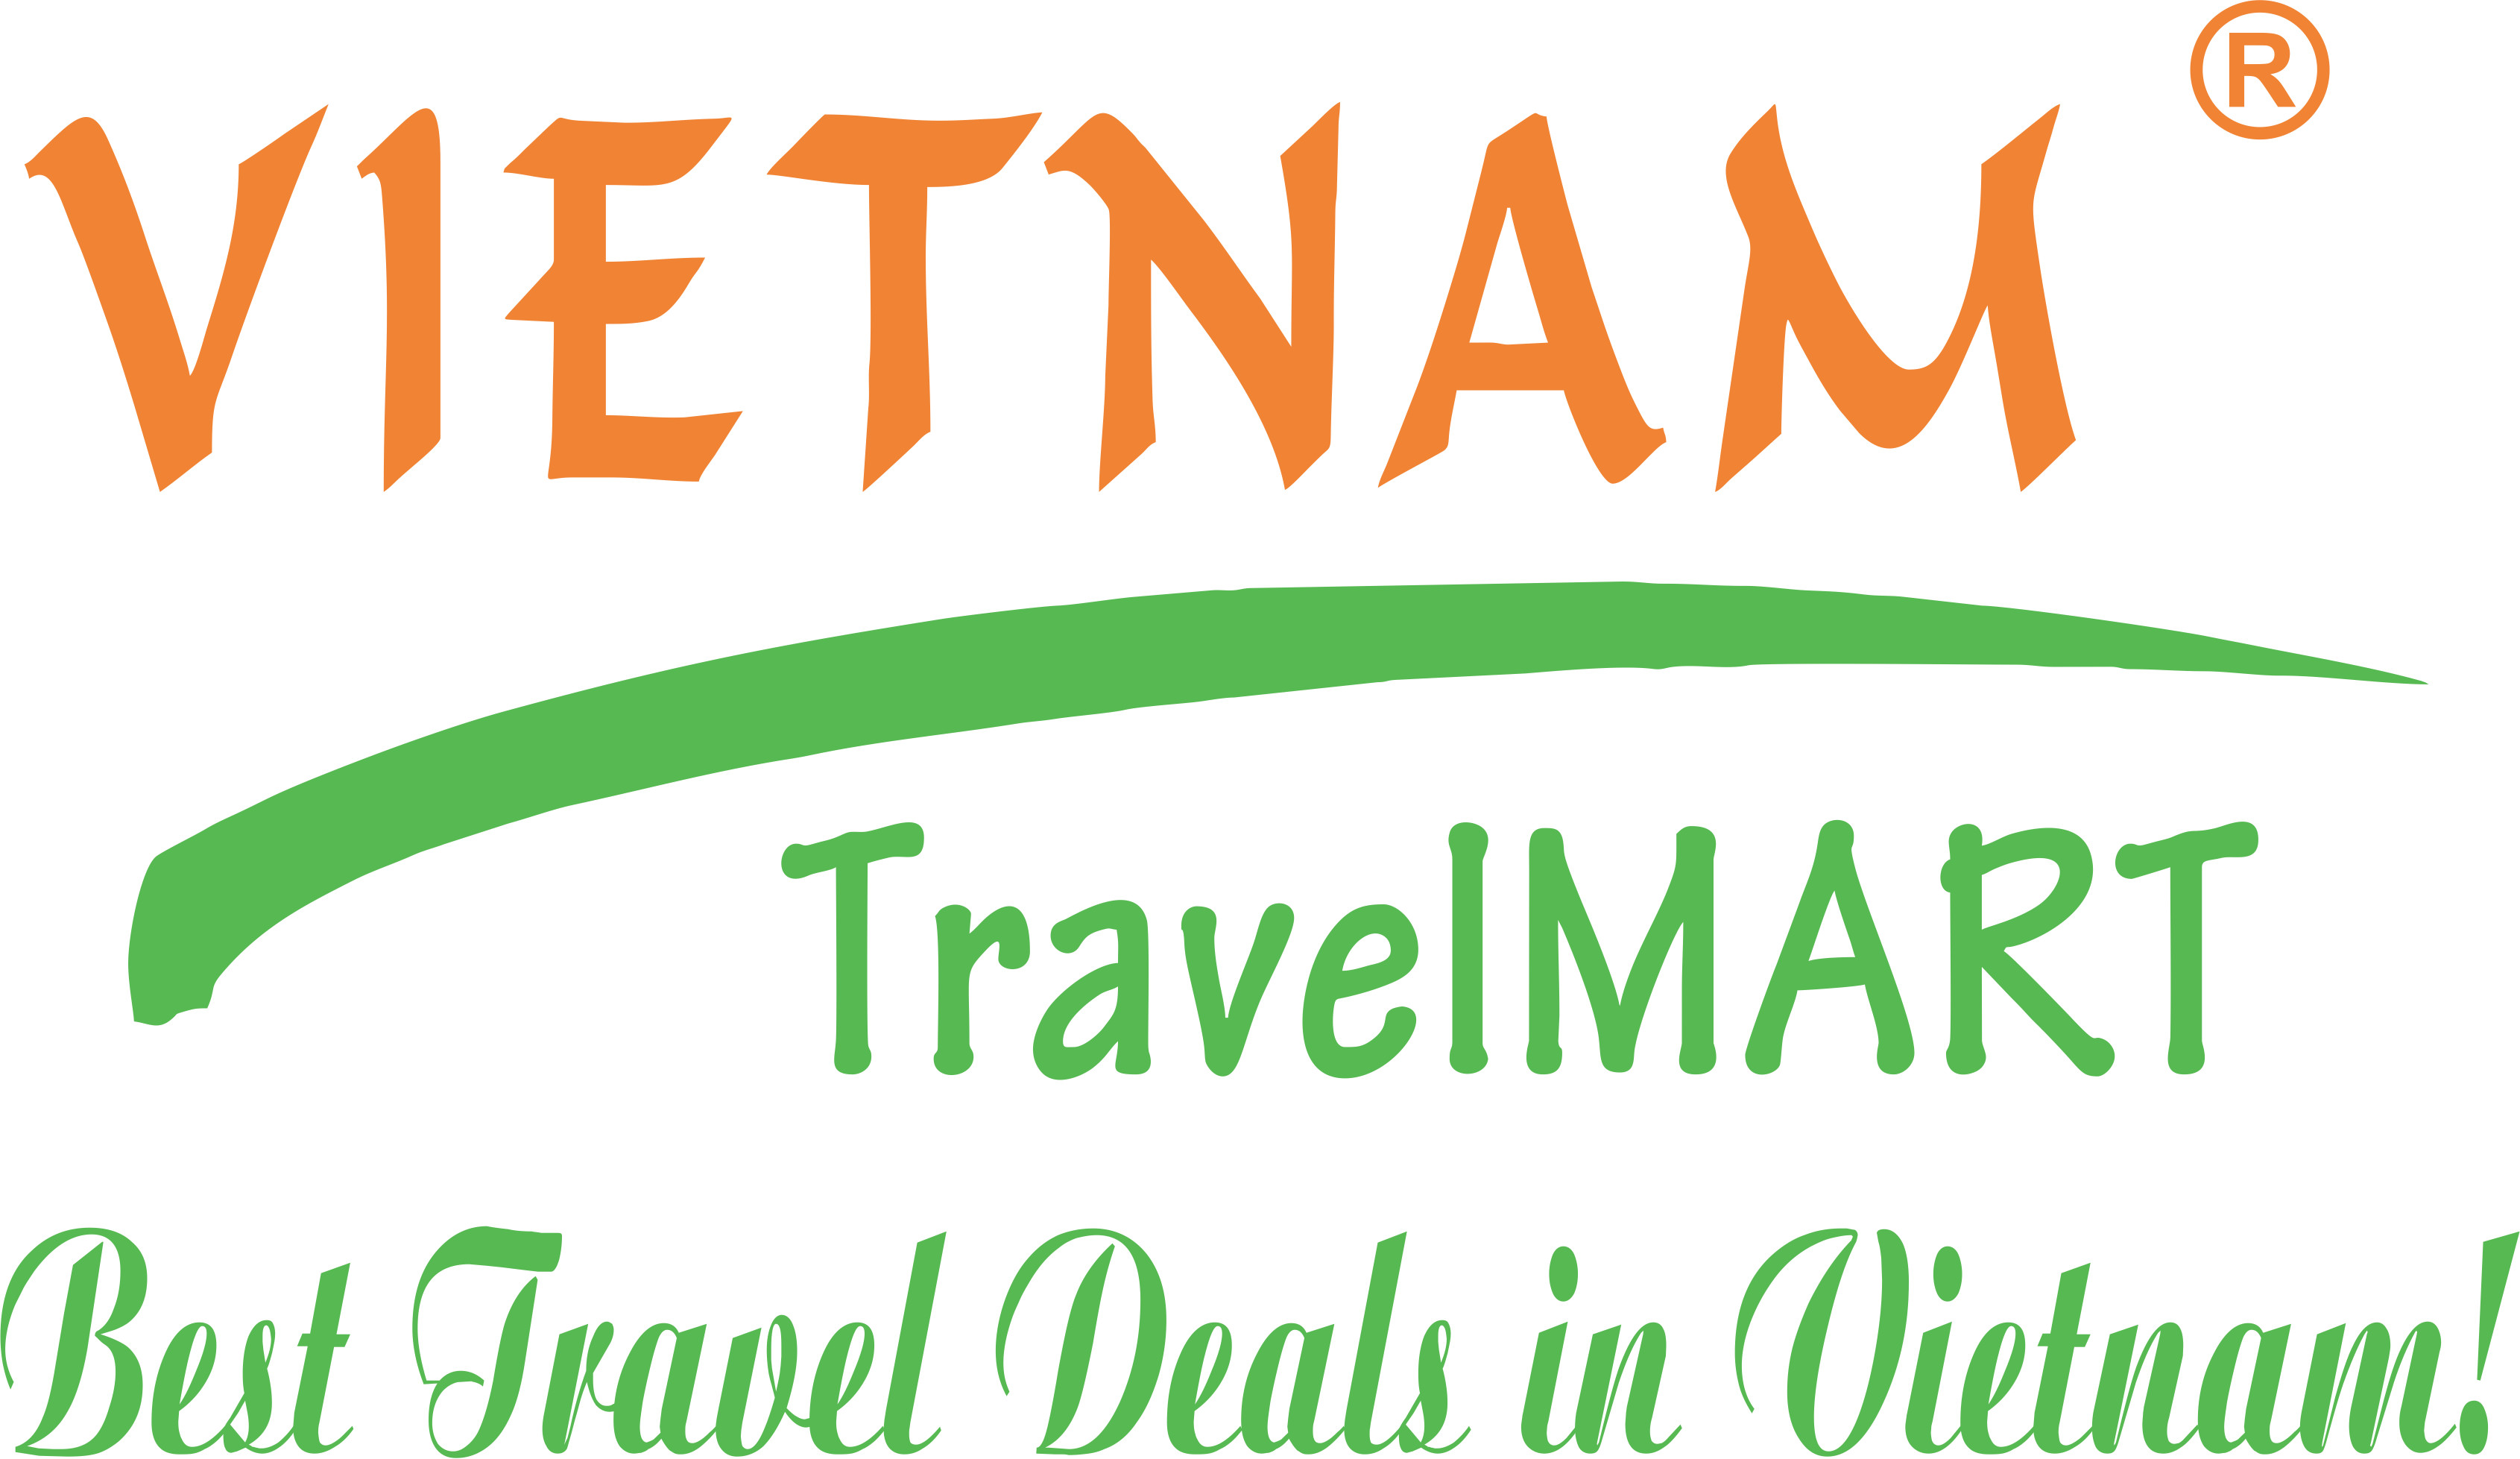 Vietnam Travel Mart Inc